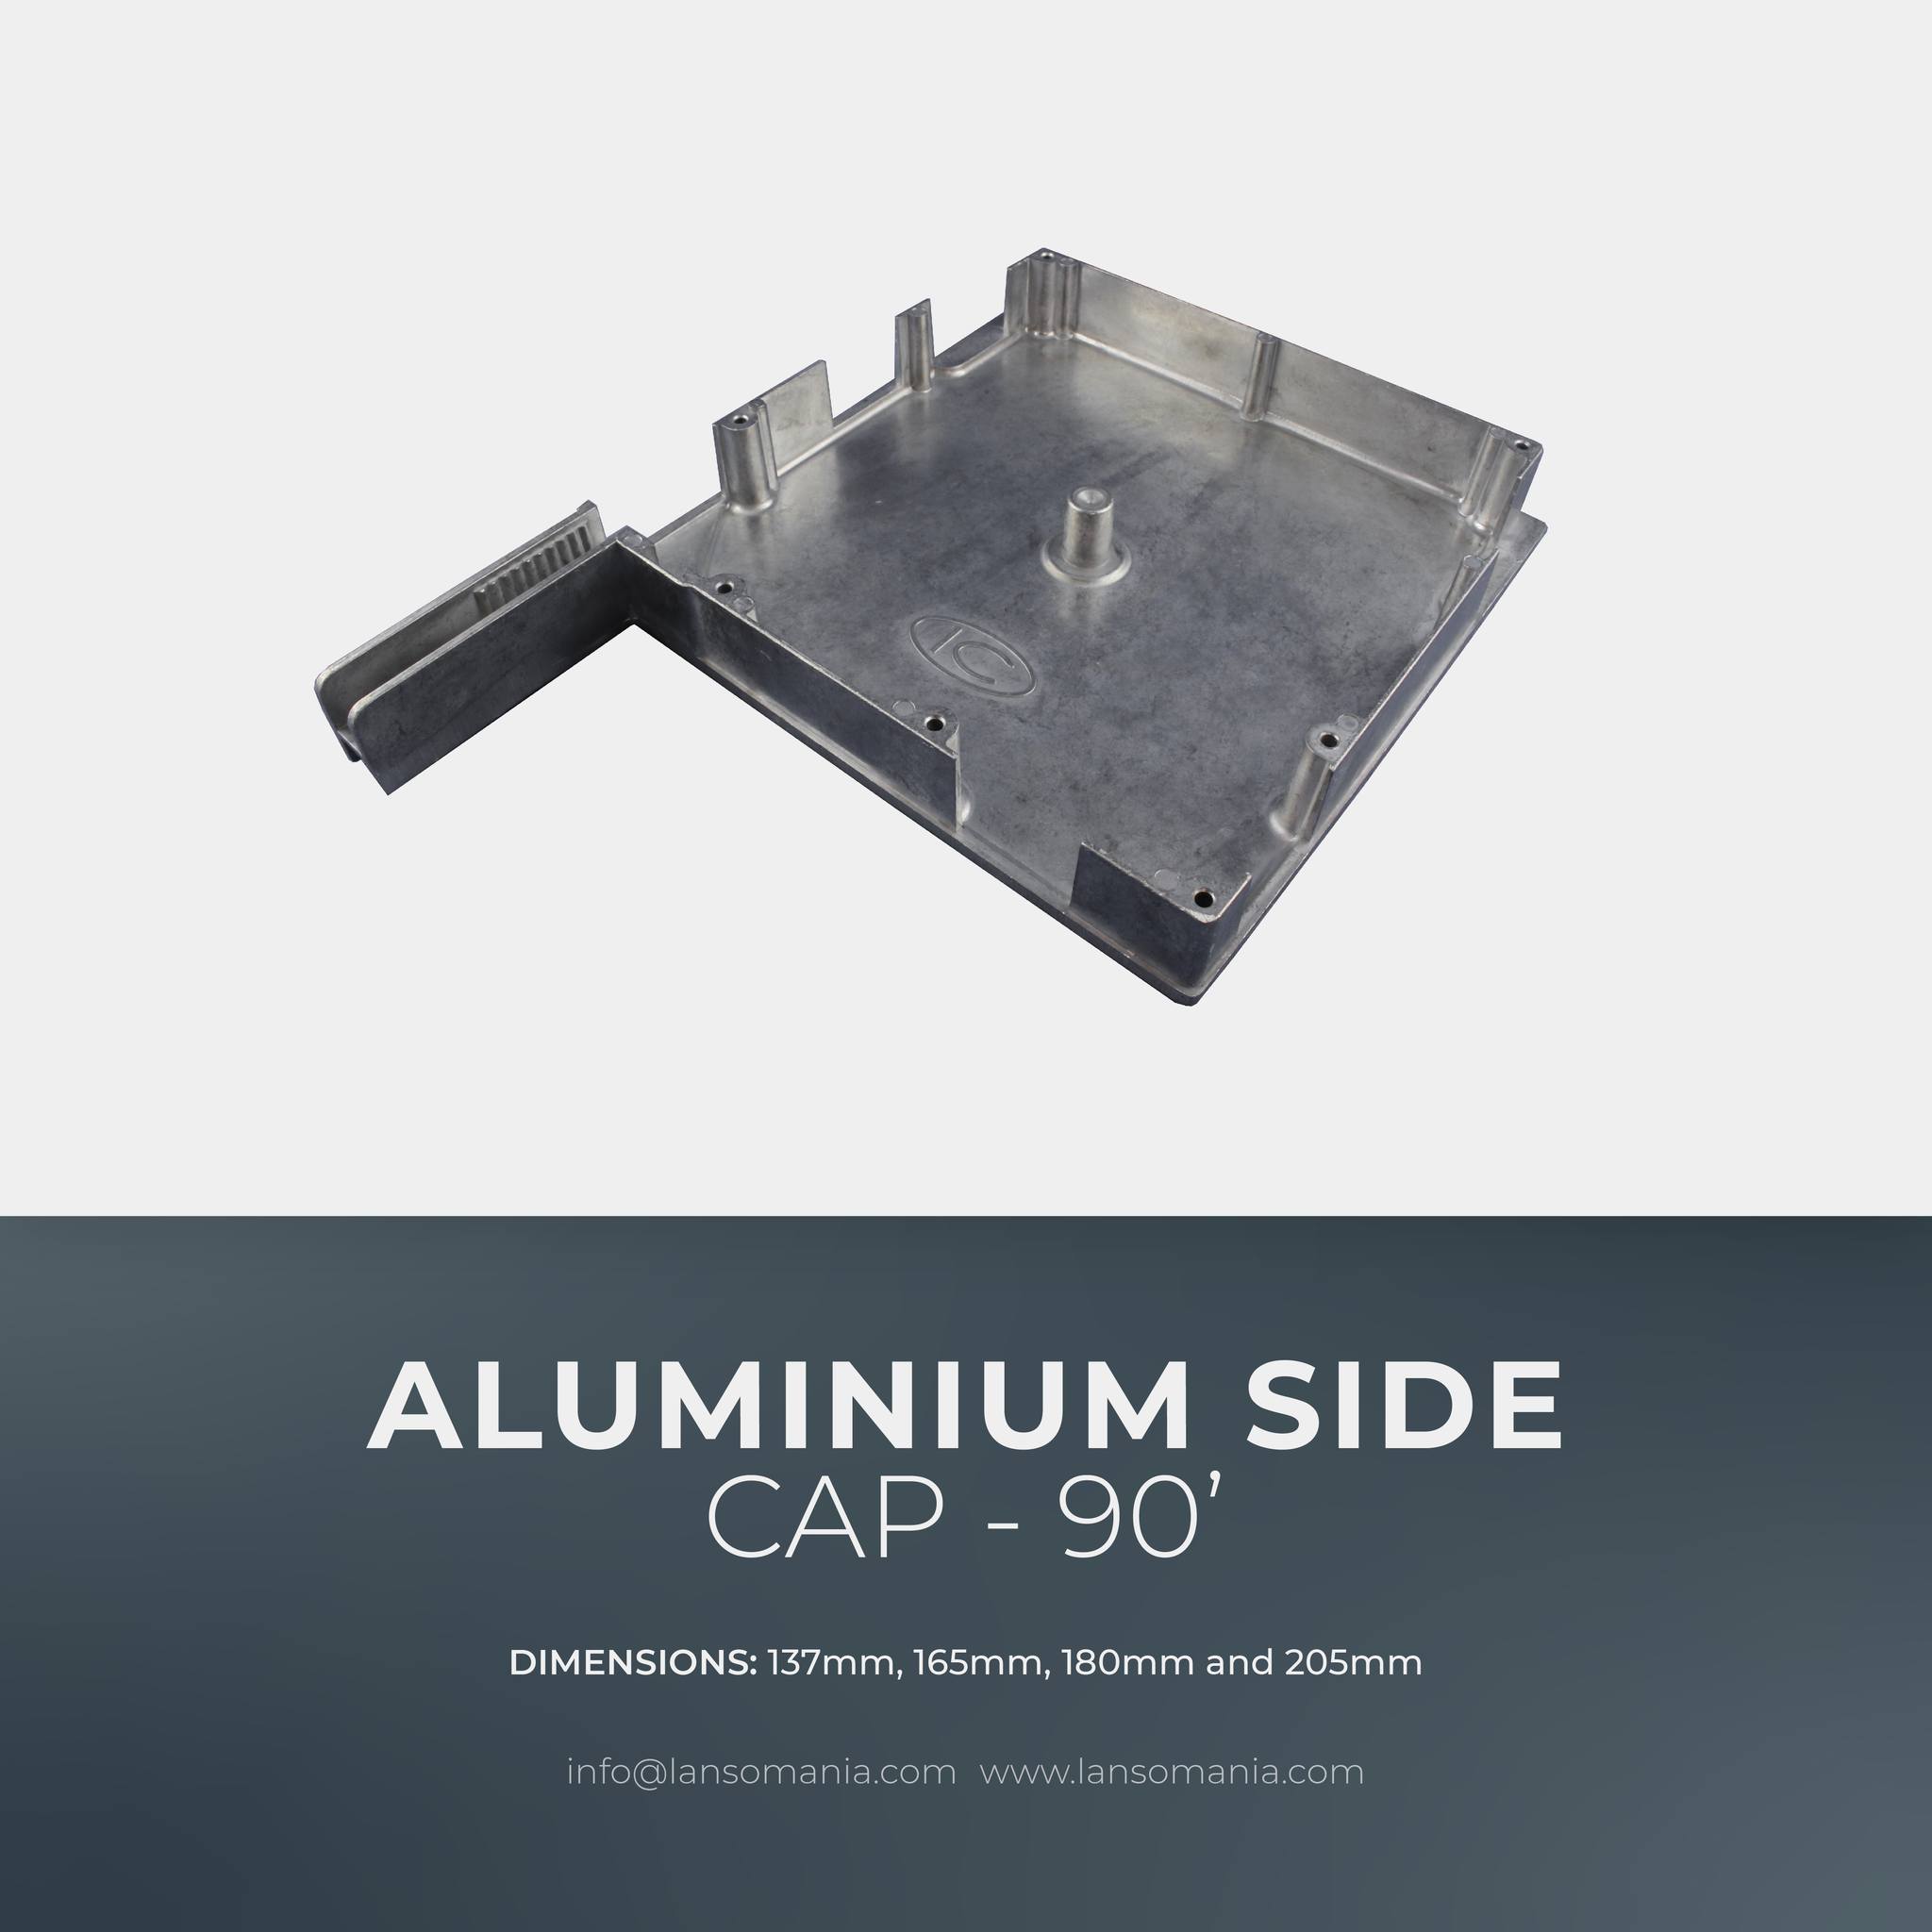 Aluminium side cap – 90′